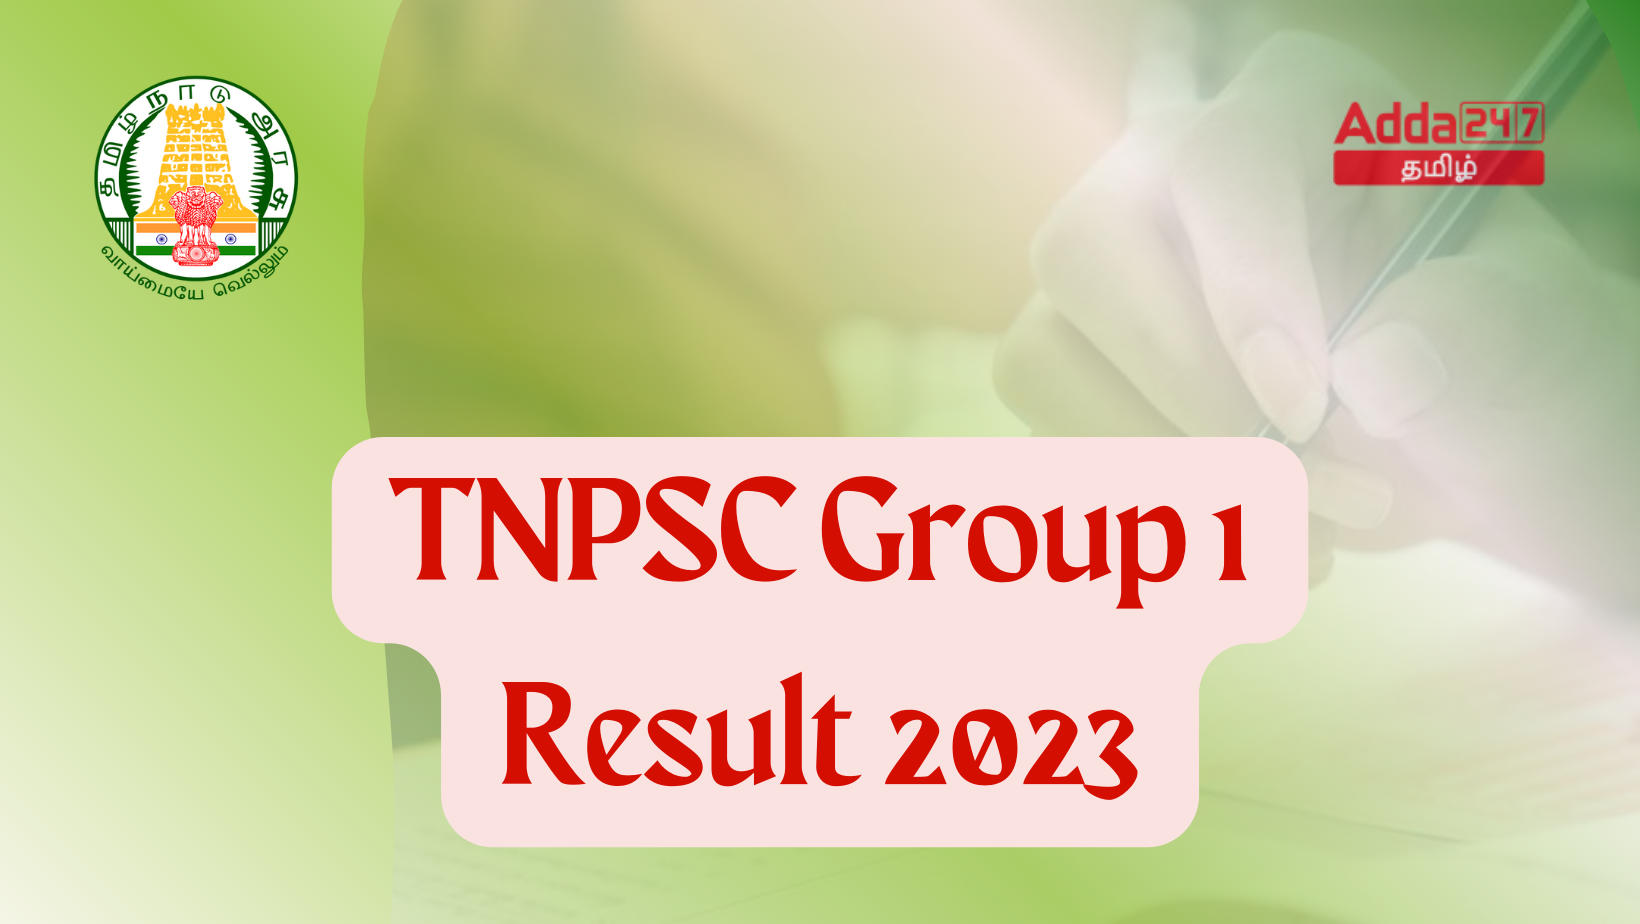 TNPSC Group 1 Result 2023